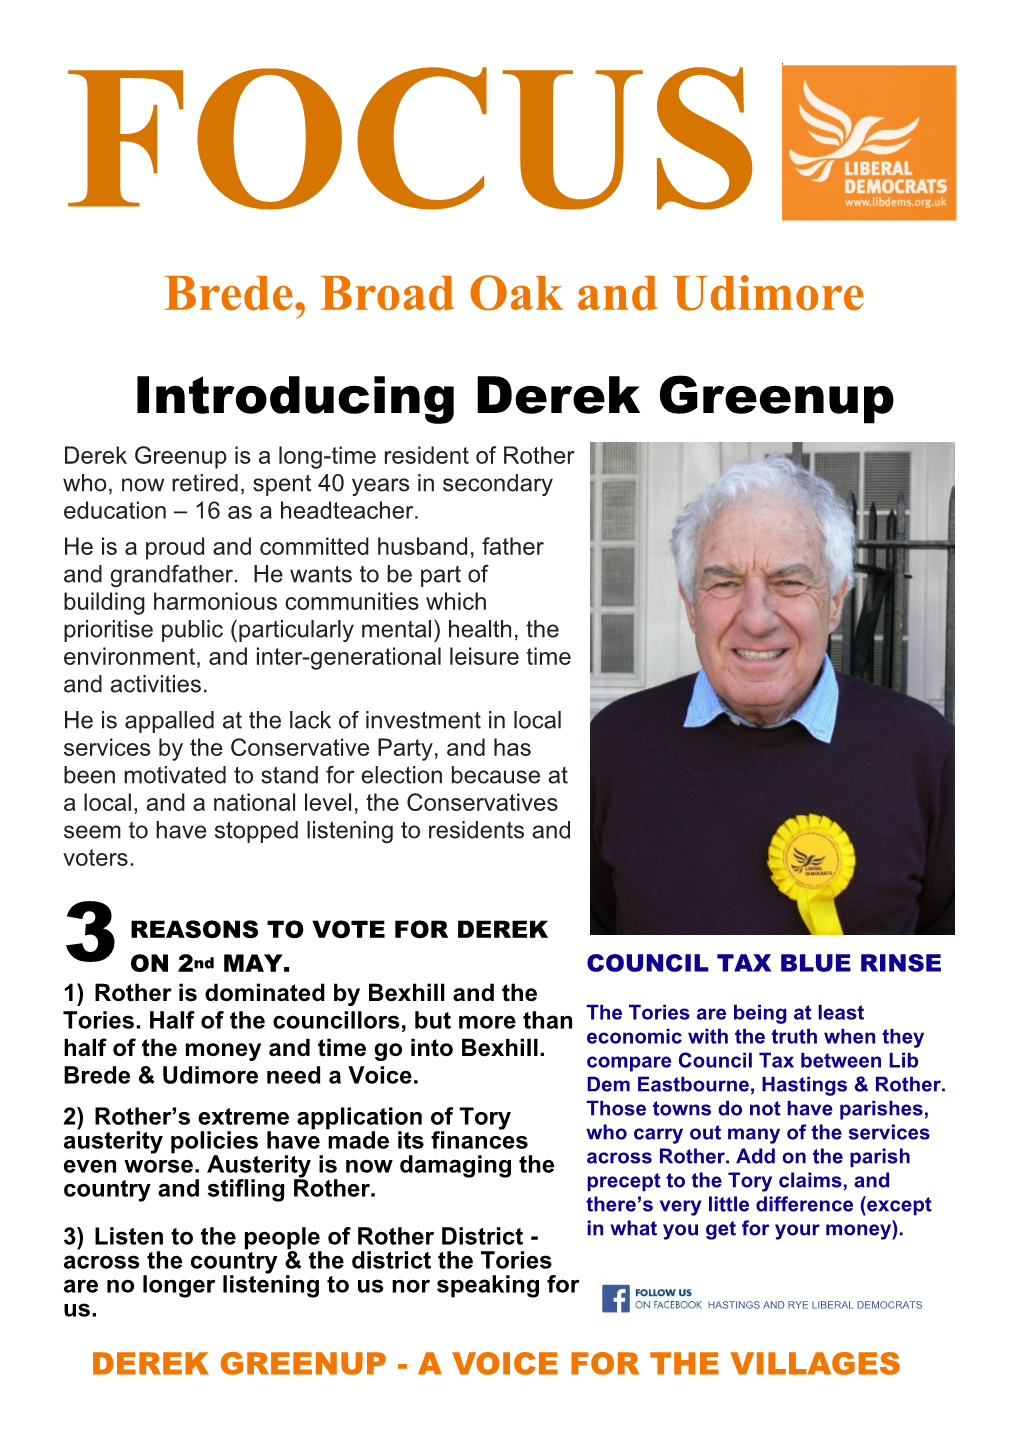 Brede, Broad Oak and Udimore Introducing Derek Greenup